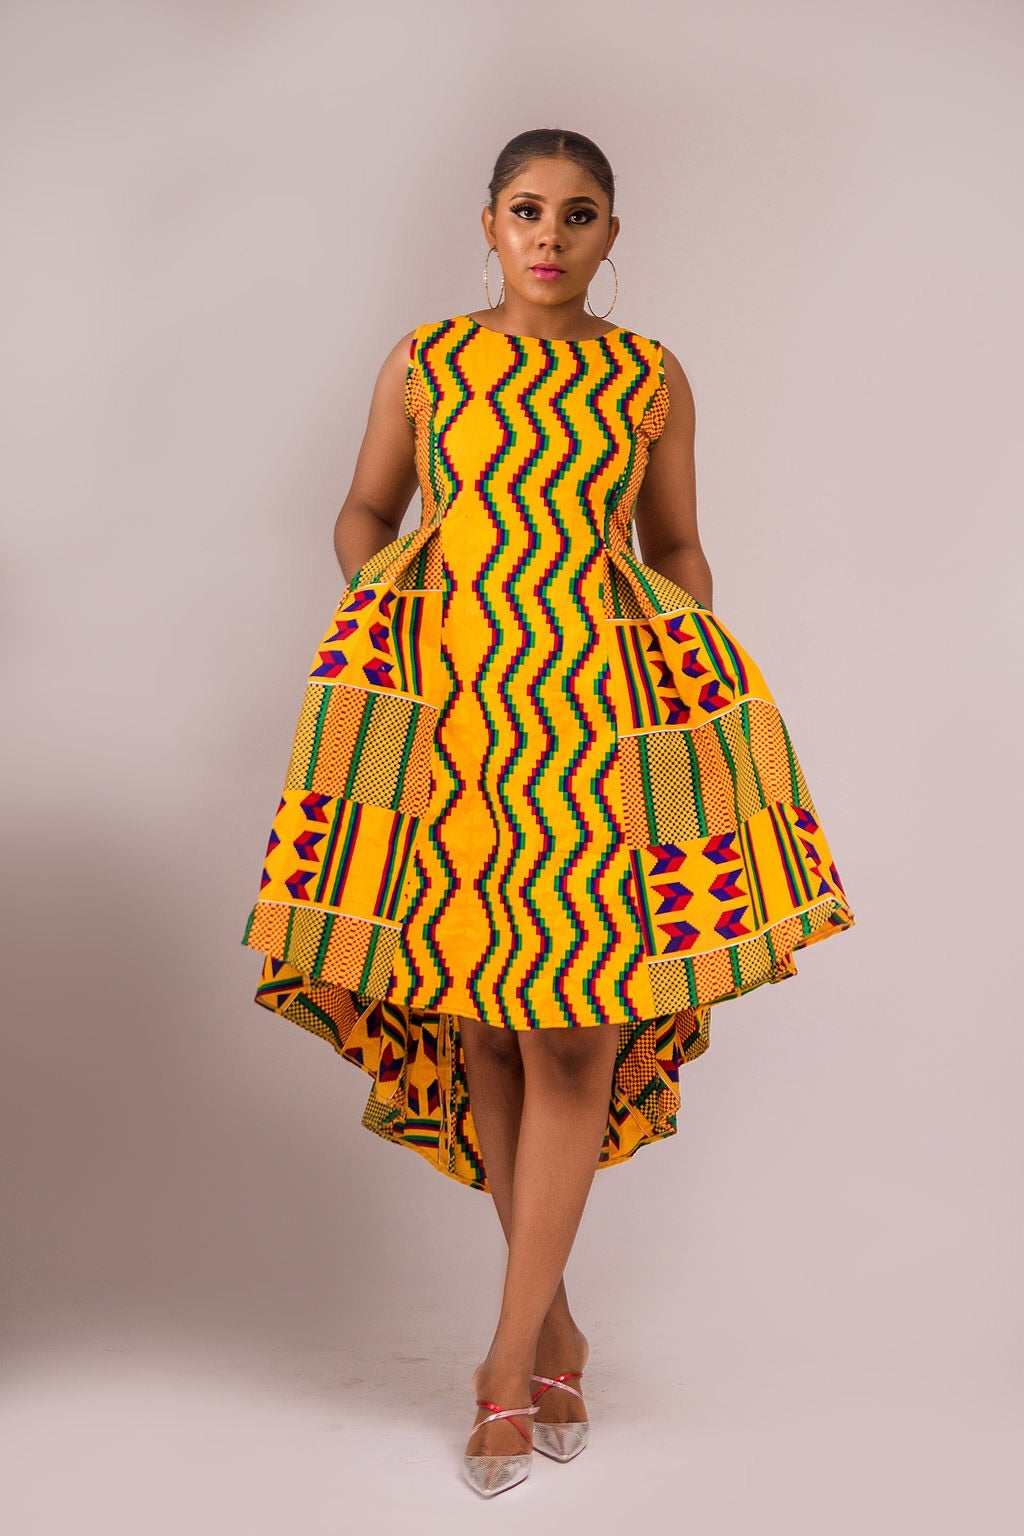 NEW IN Rutendo African print kente dress - Afrothrone